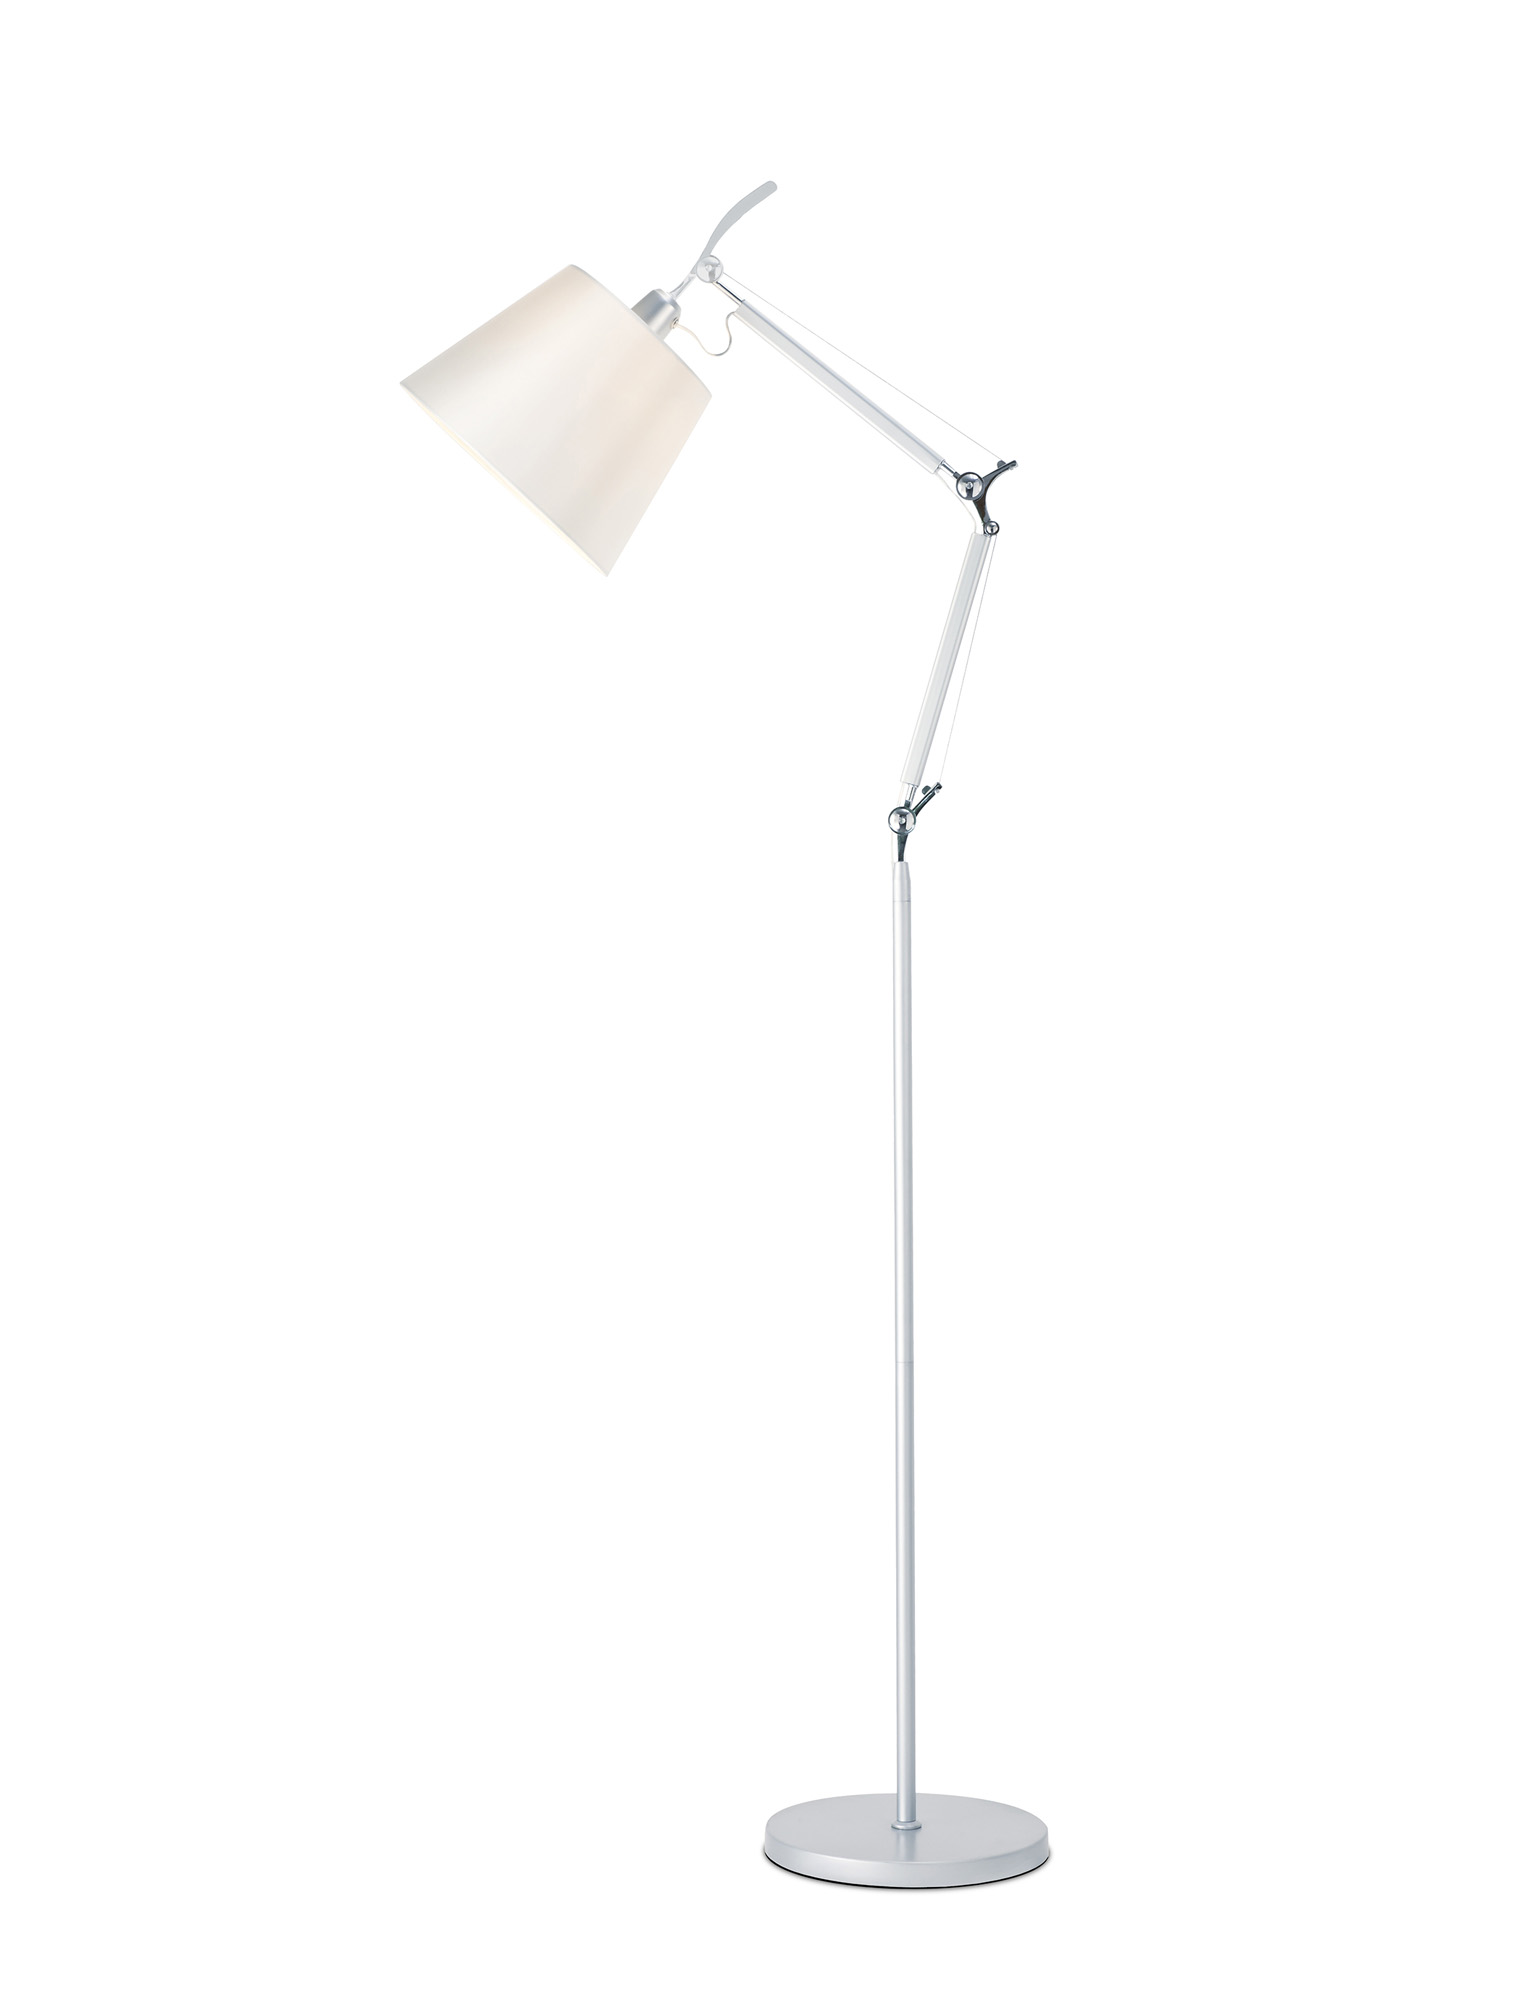 D0235  Karis 165cm Floor Lamp 1 Light Silver, Polished Chrome